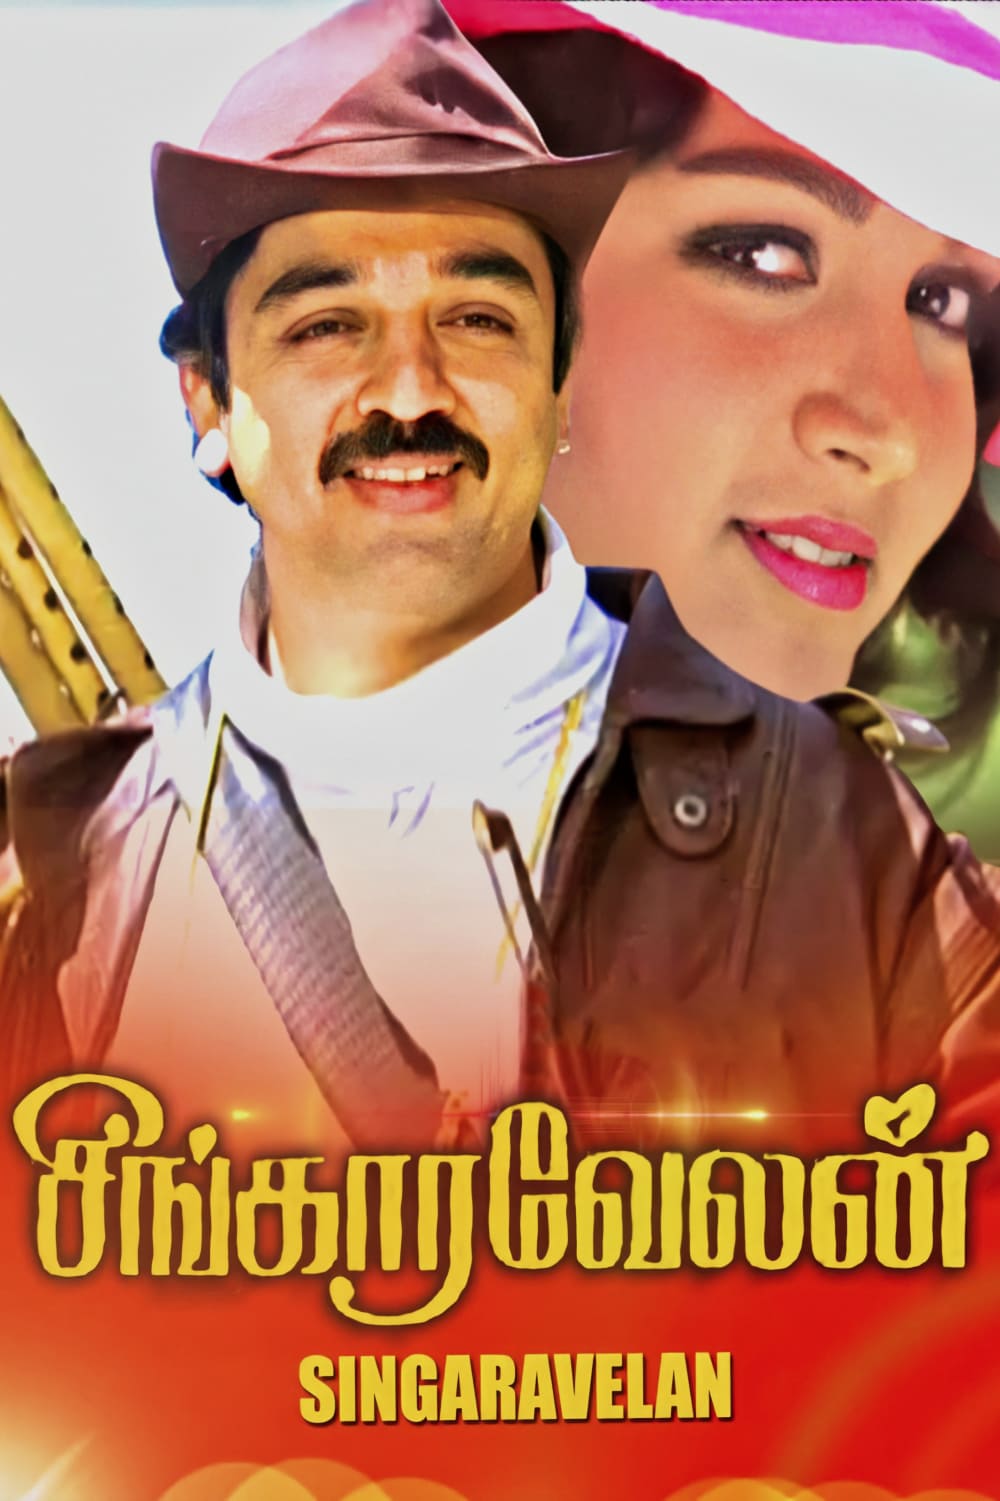 Poster for the movie "Singaravelan"